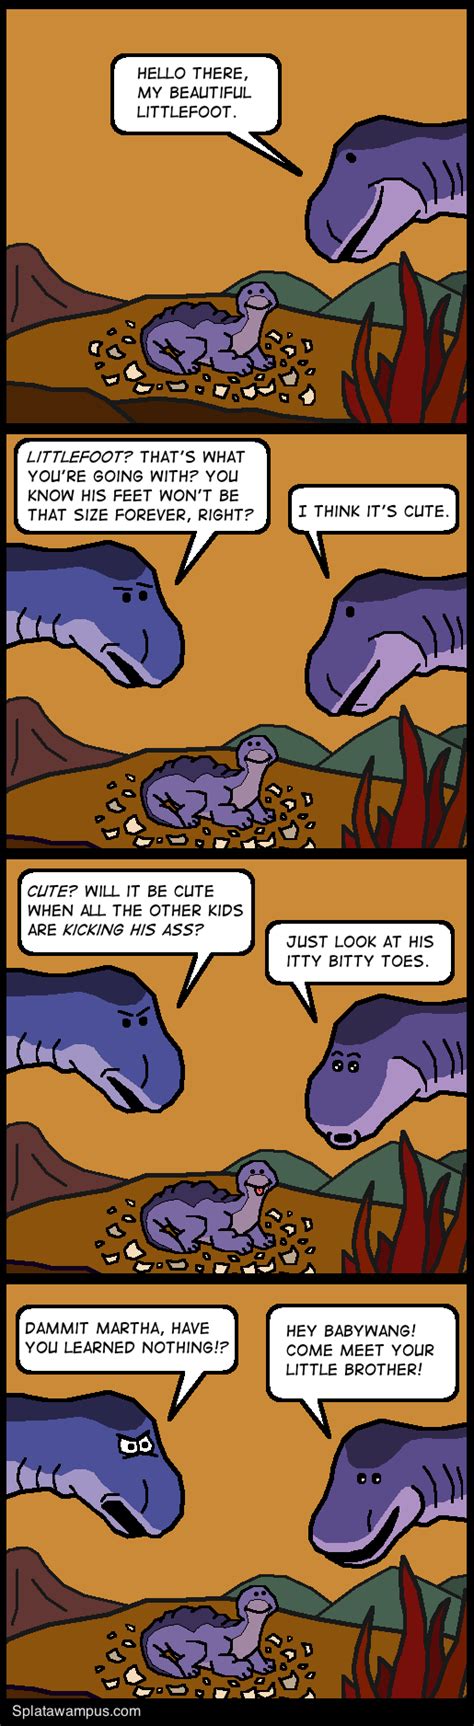 littlefoot comics